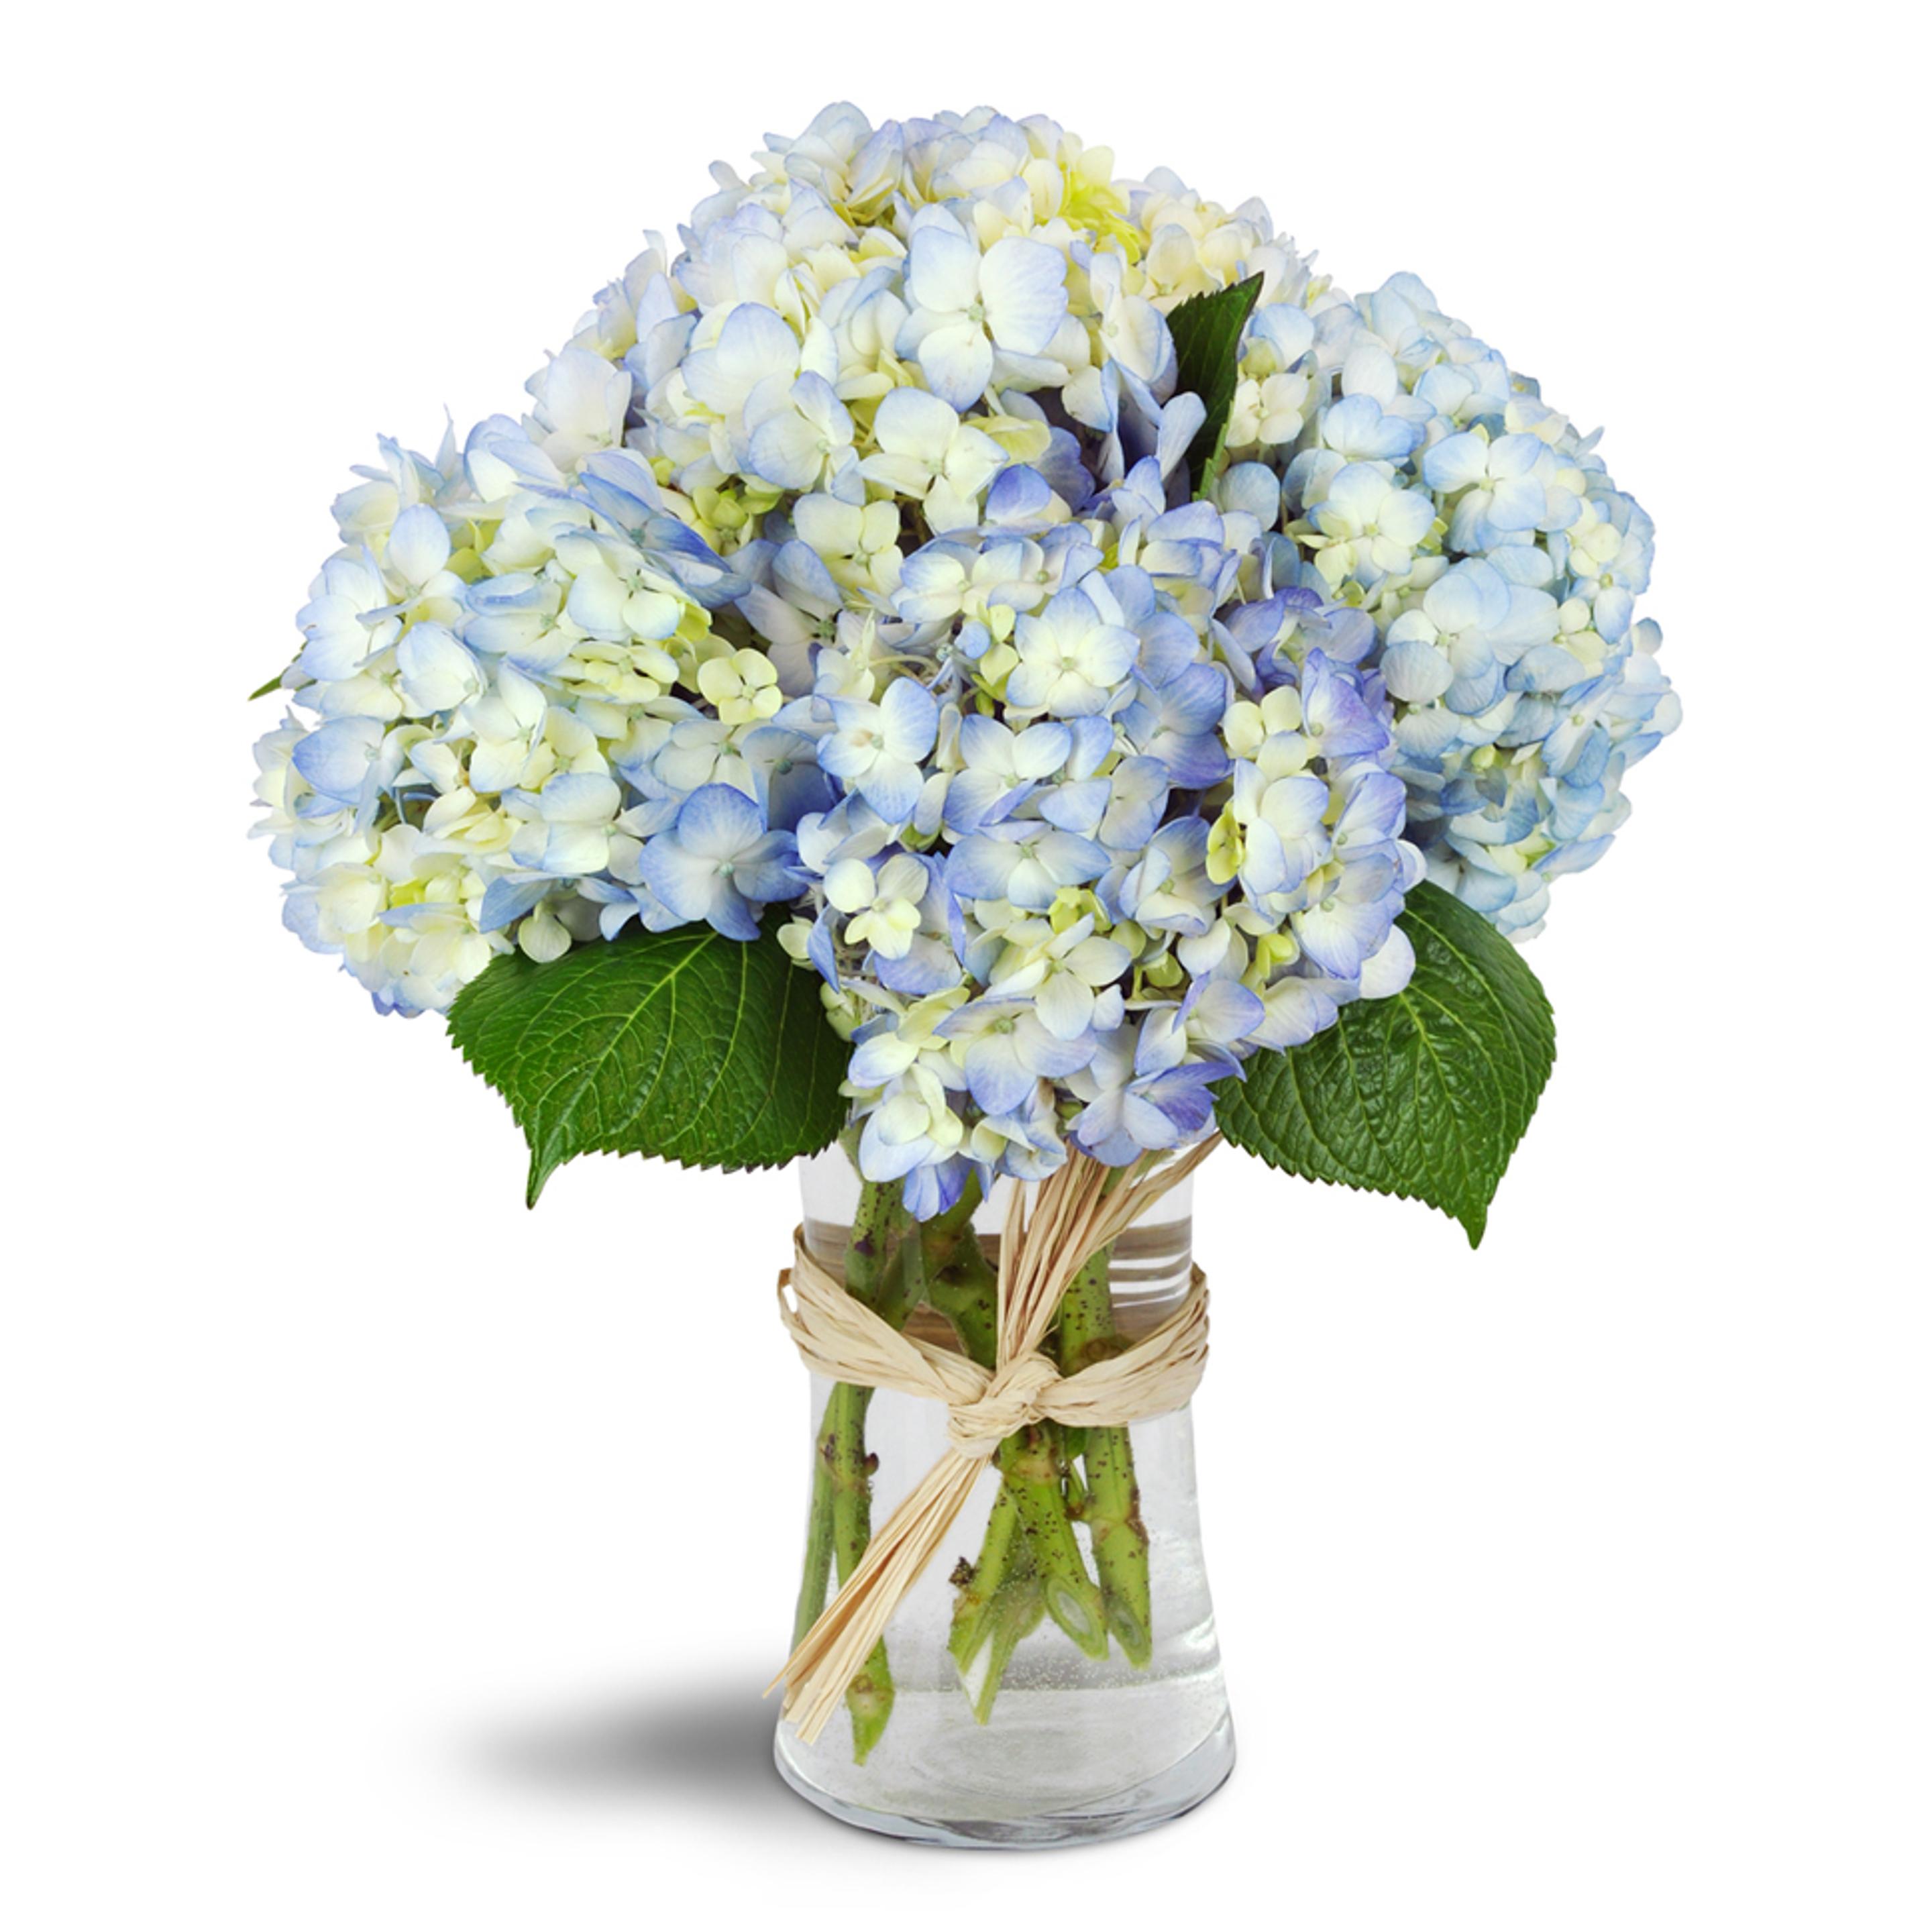 Blue flower arrangement - blue hydrangea are arranged in a gracious glass vase.